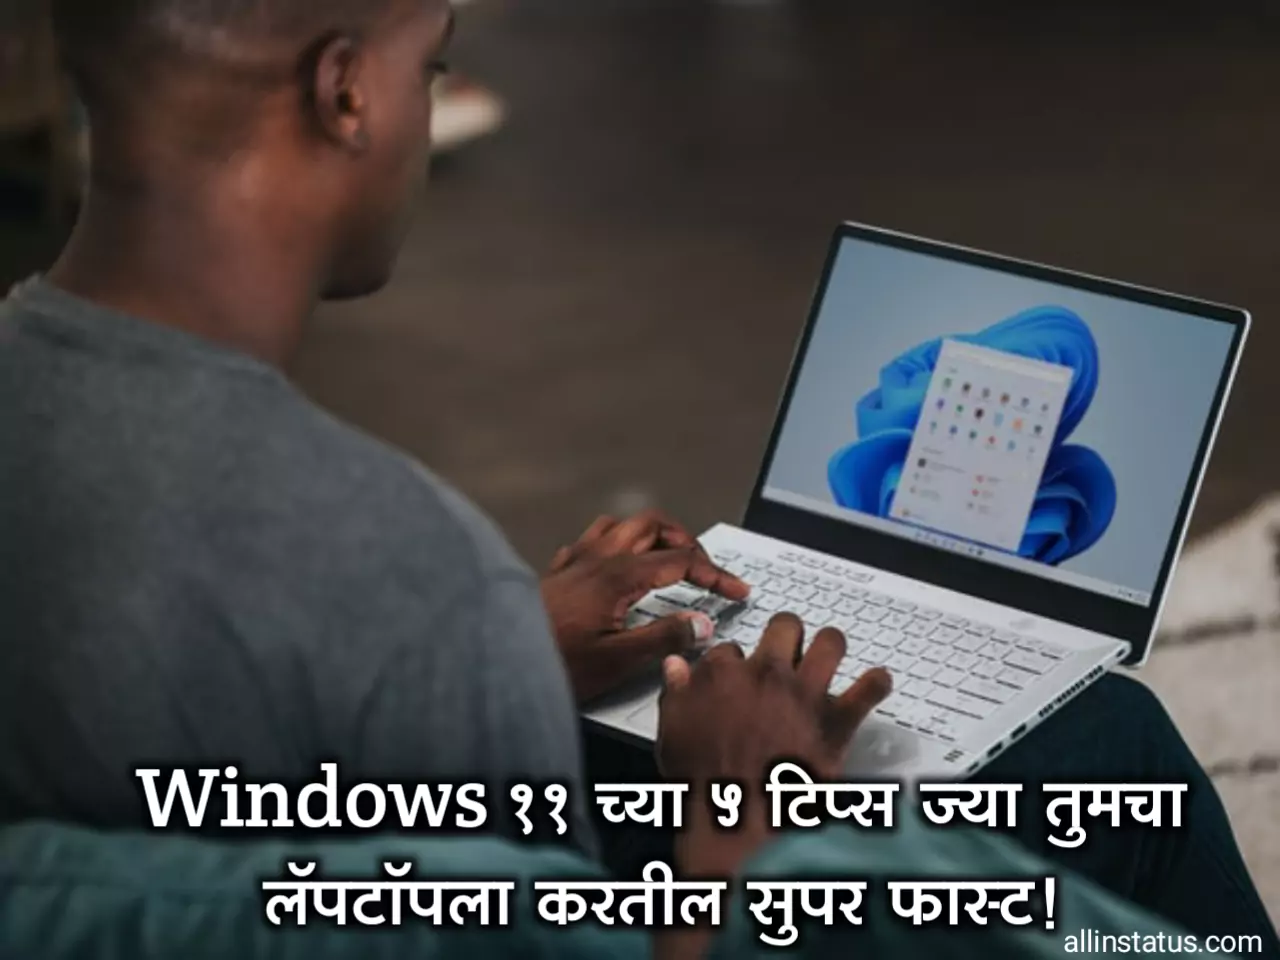 Windows 11 Tips in marathi